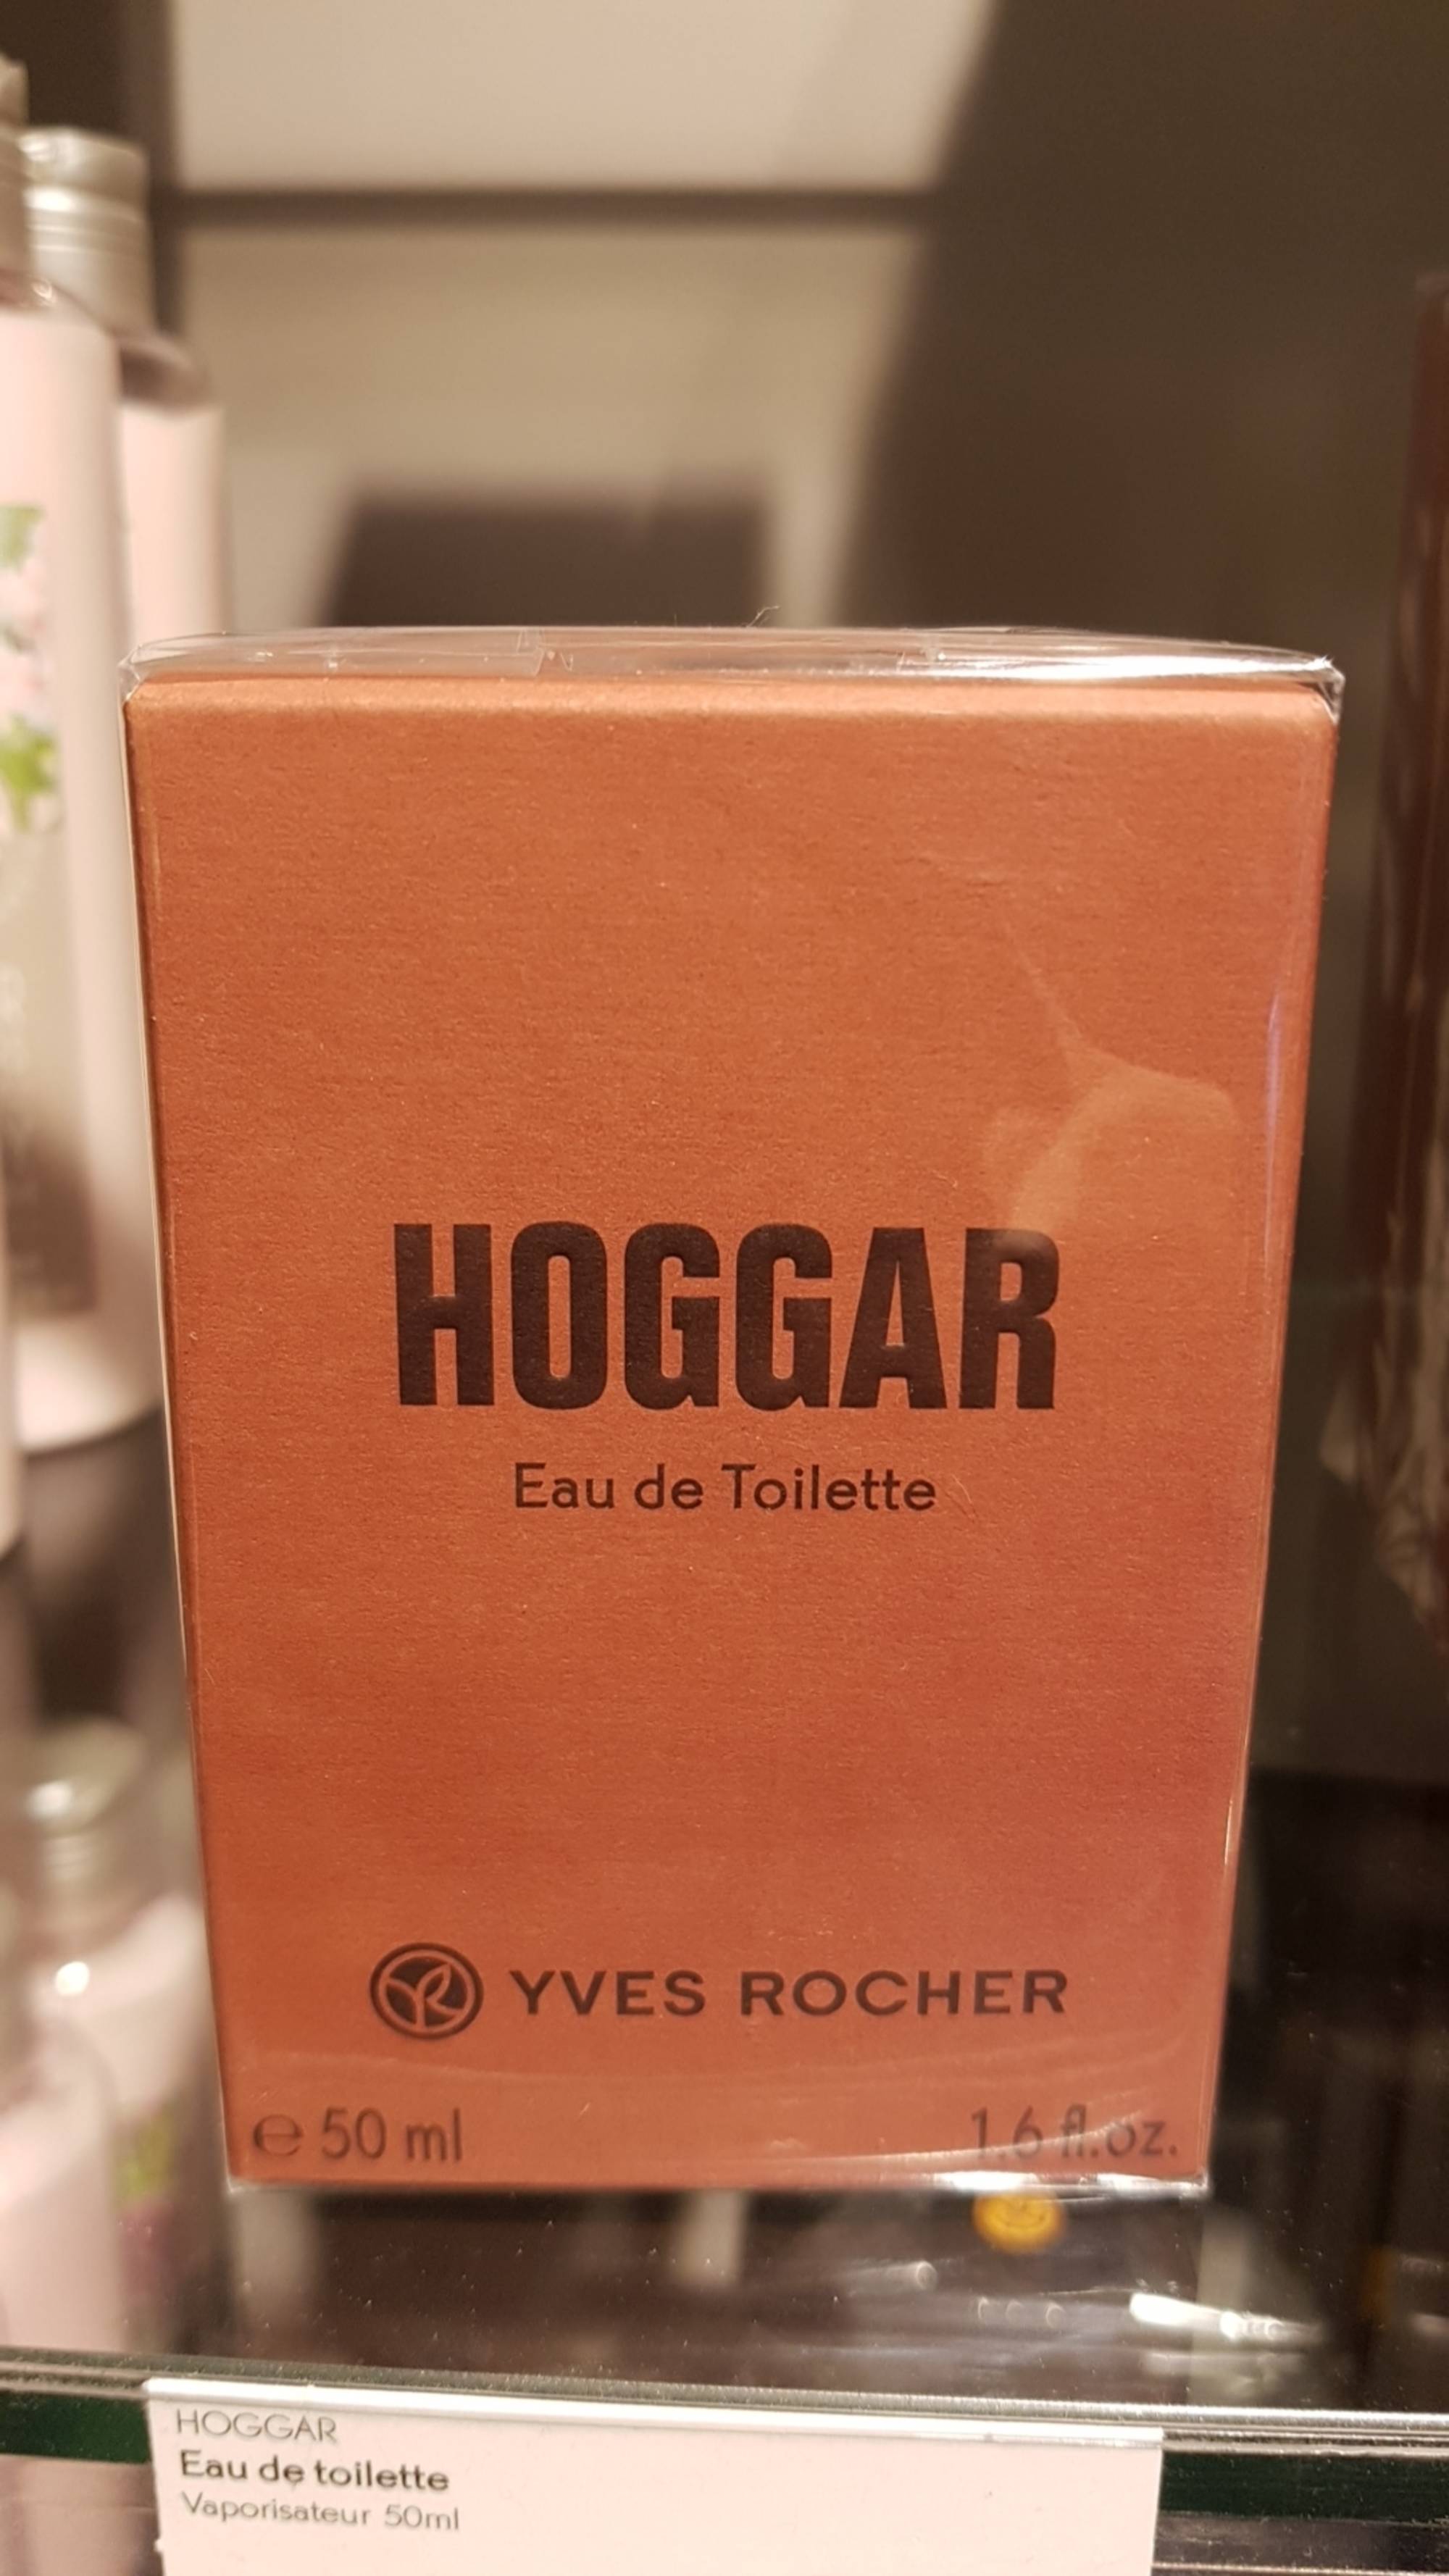 Composition YVES ROCHER Hoggar - Eau de toilette - UFC-Que Choisir